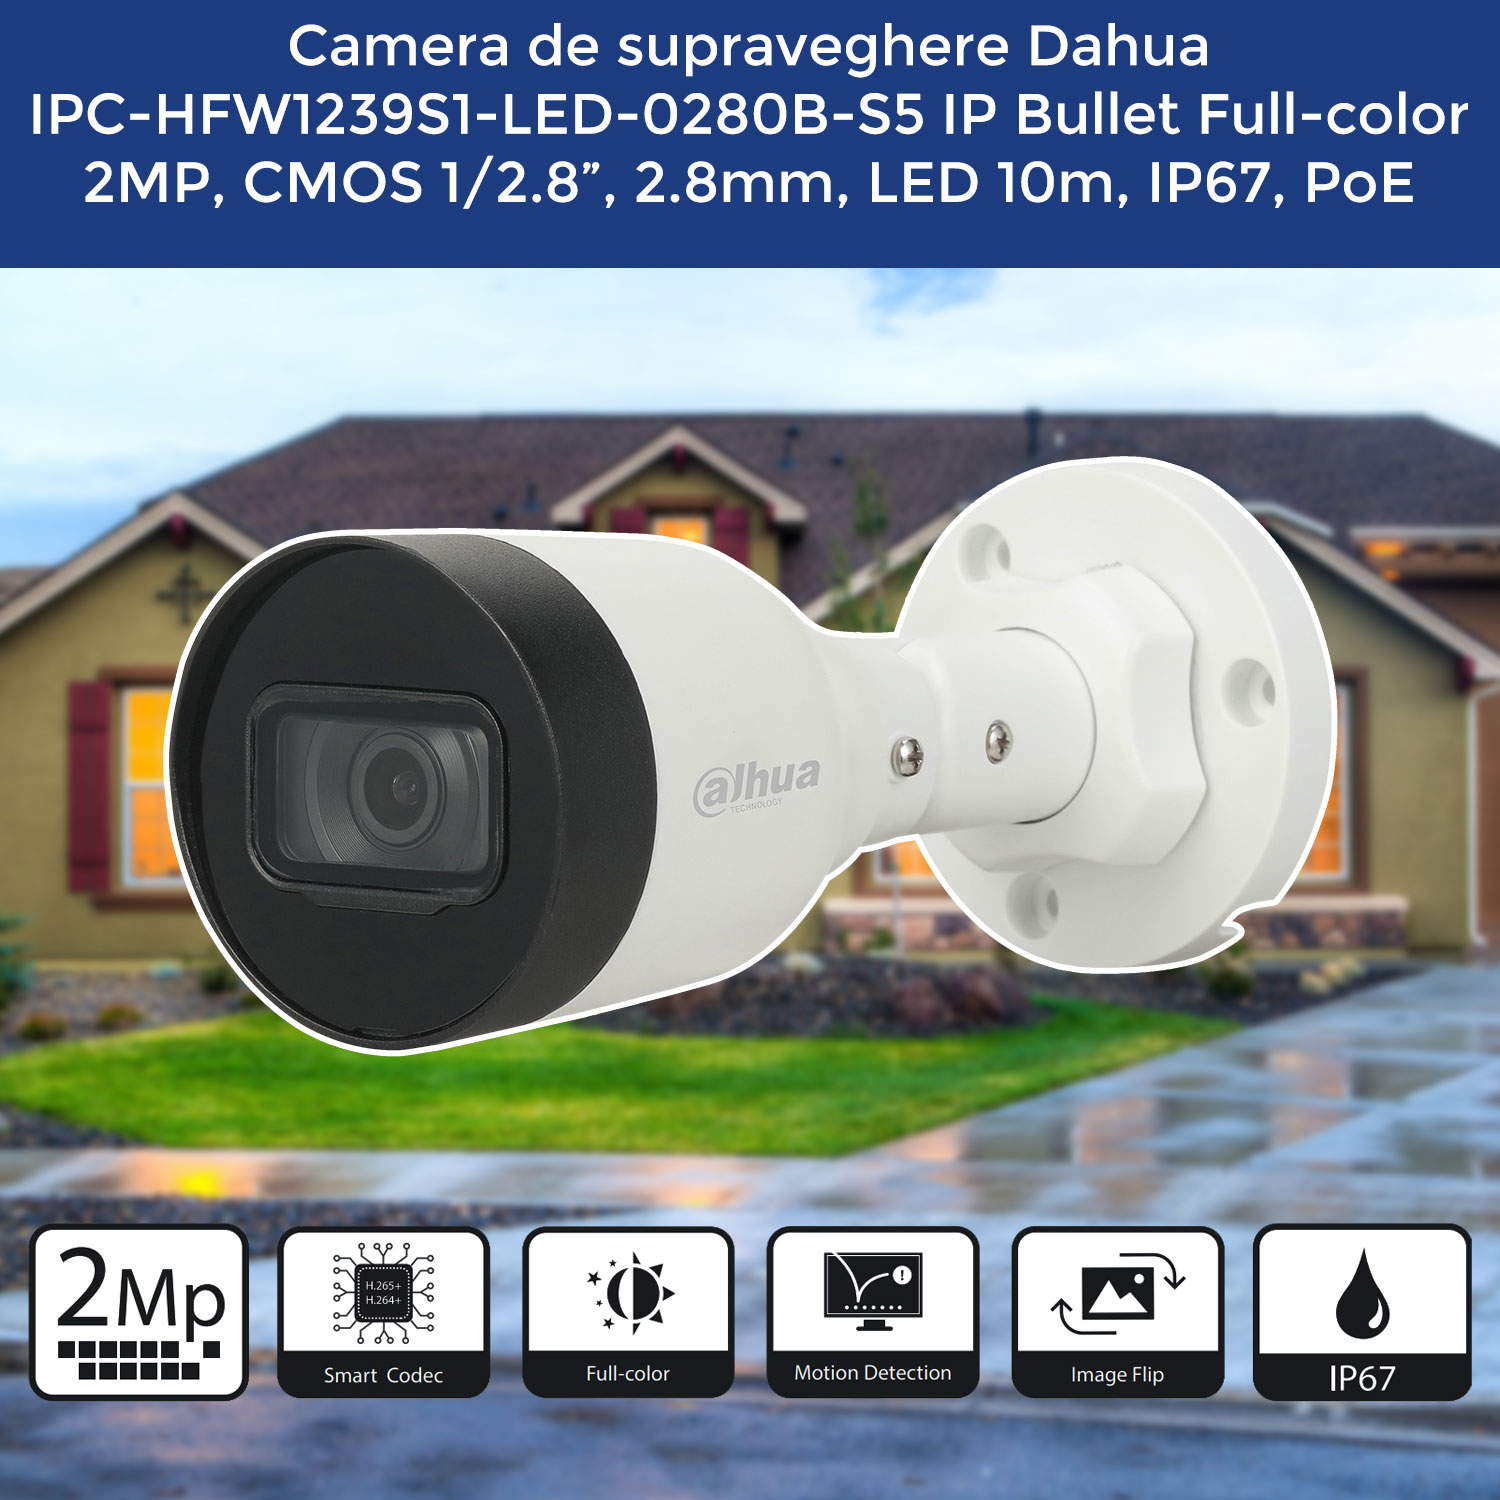 Camera de supraveghere Dahua IPC-HFW1239S1-LED-0280B-S5 IP Bullet Full-color 2MP, CMOS 1/2.8'', 2.8mm, LED 10m, IP67, PoE